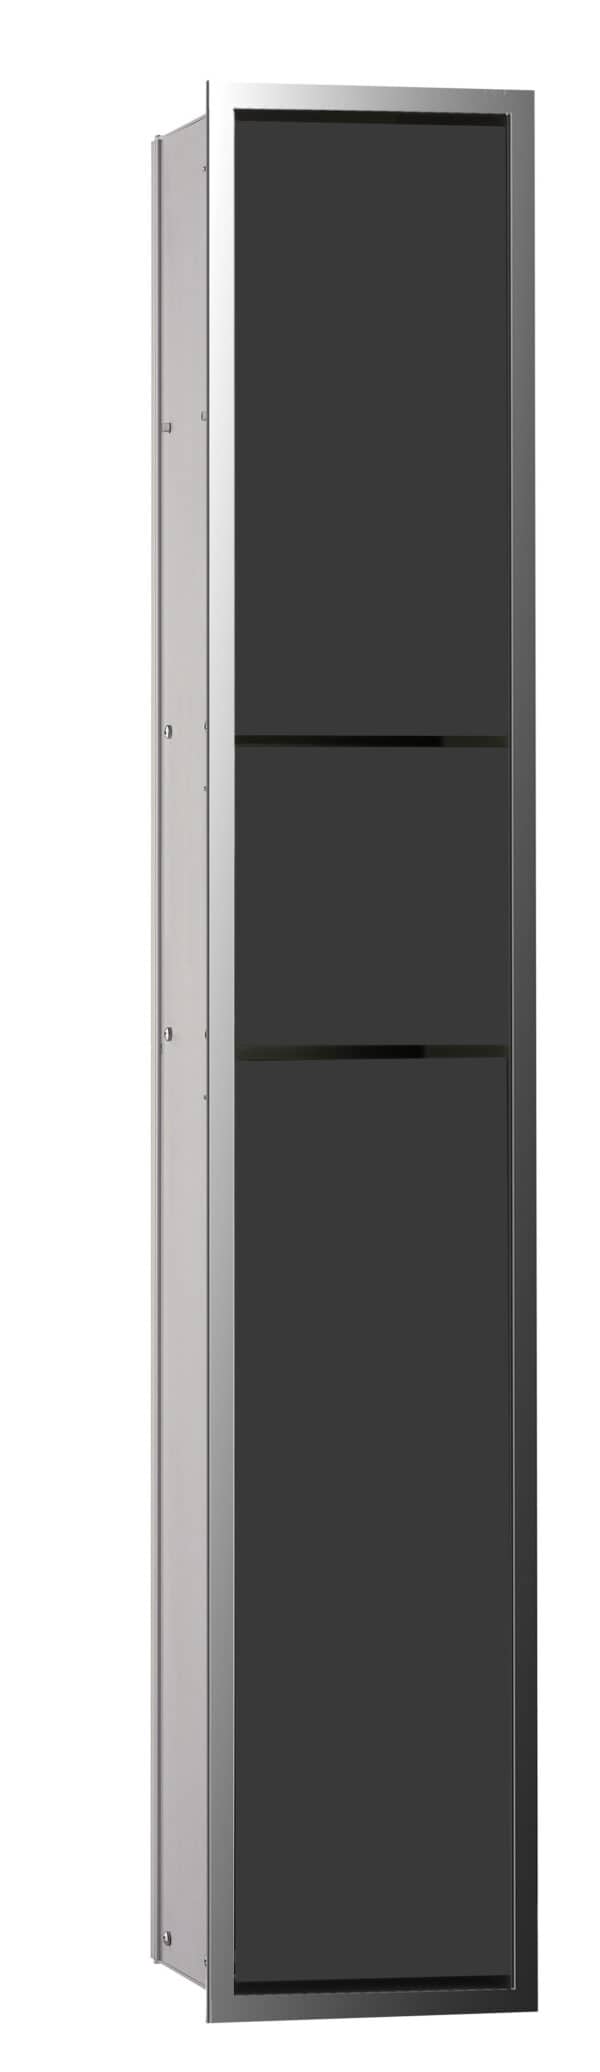 emco asis 150 Toiletmodule - inbouwmodel - chroom/zwart, 168 mm